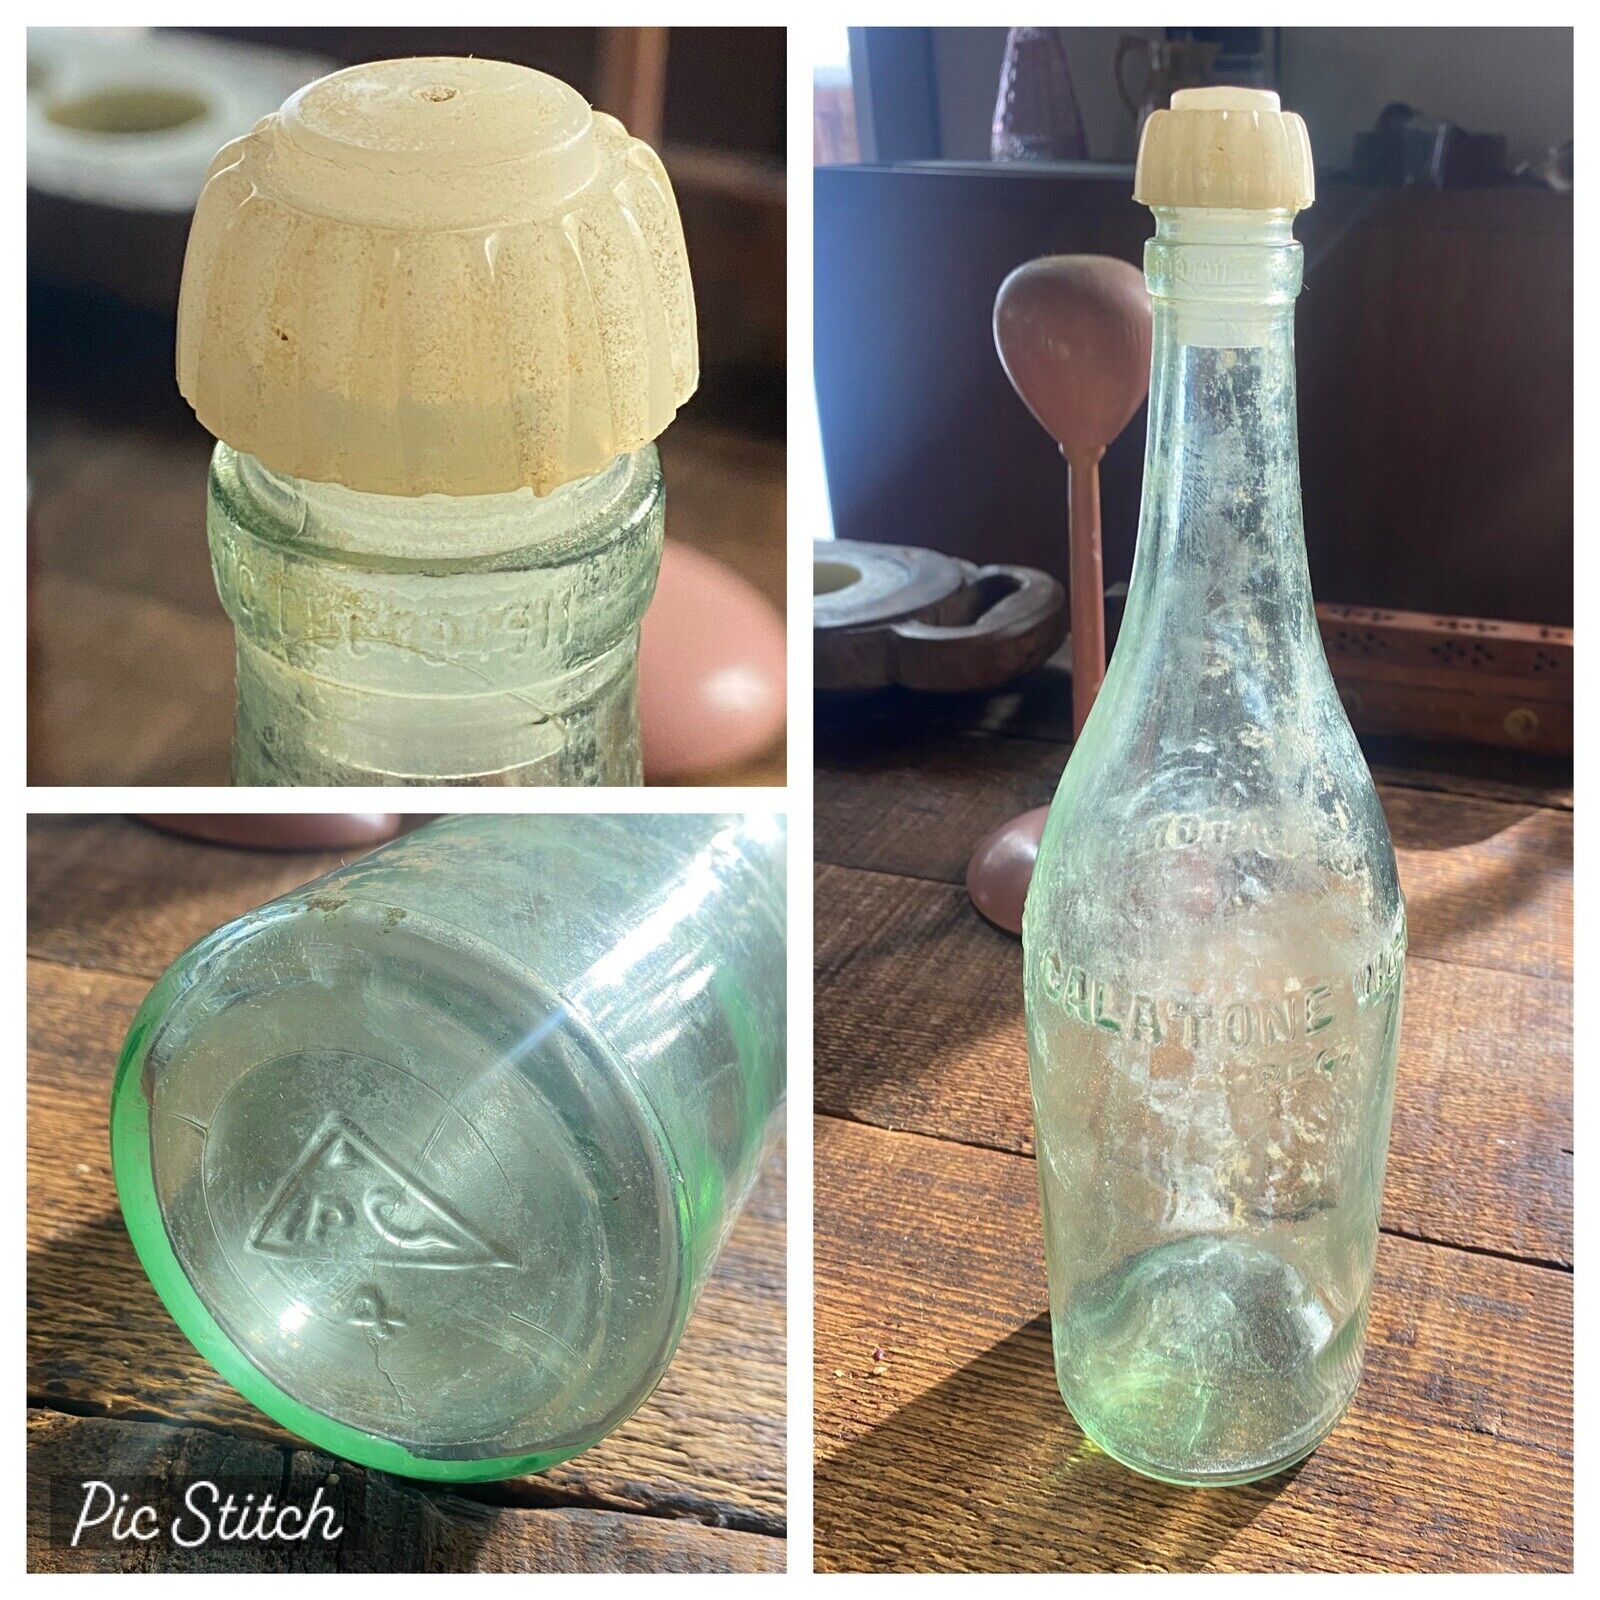 1911 Calatone Water Co Oakland, CA x Illinois Pacific Glass bottle baseball cap